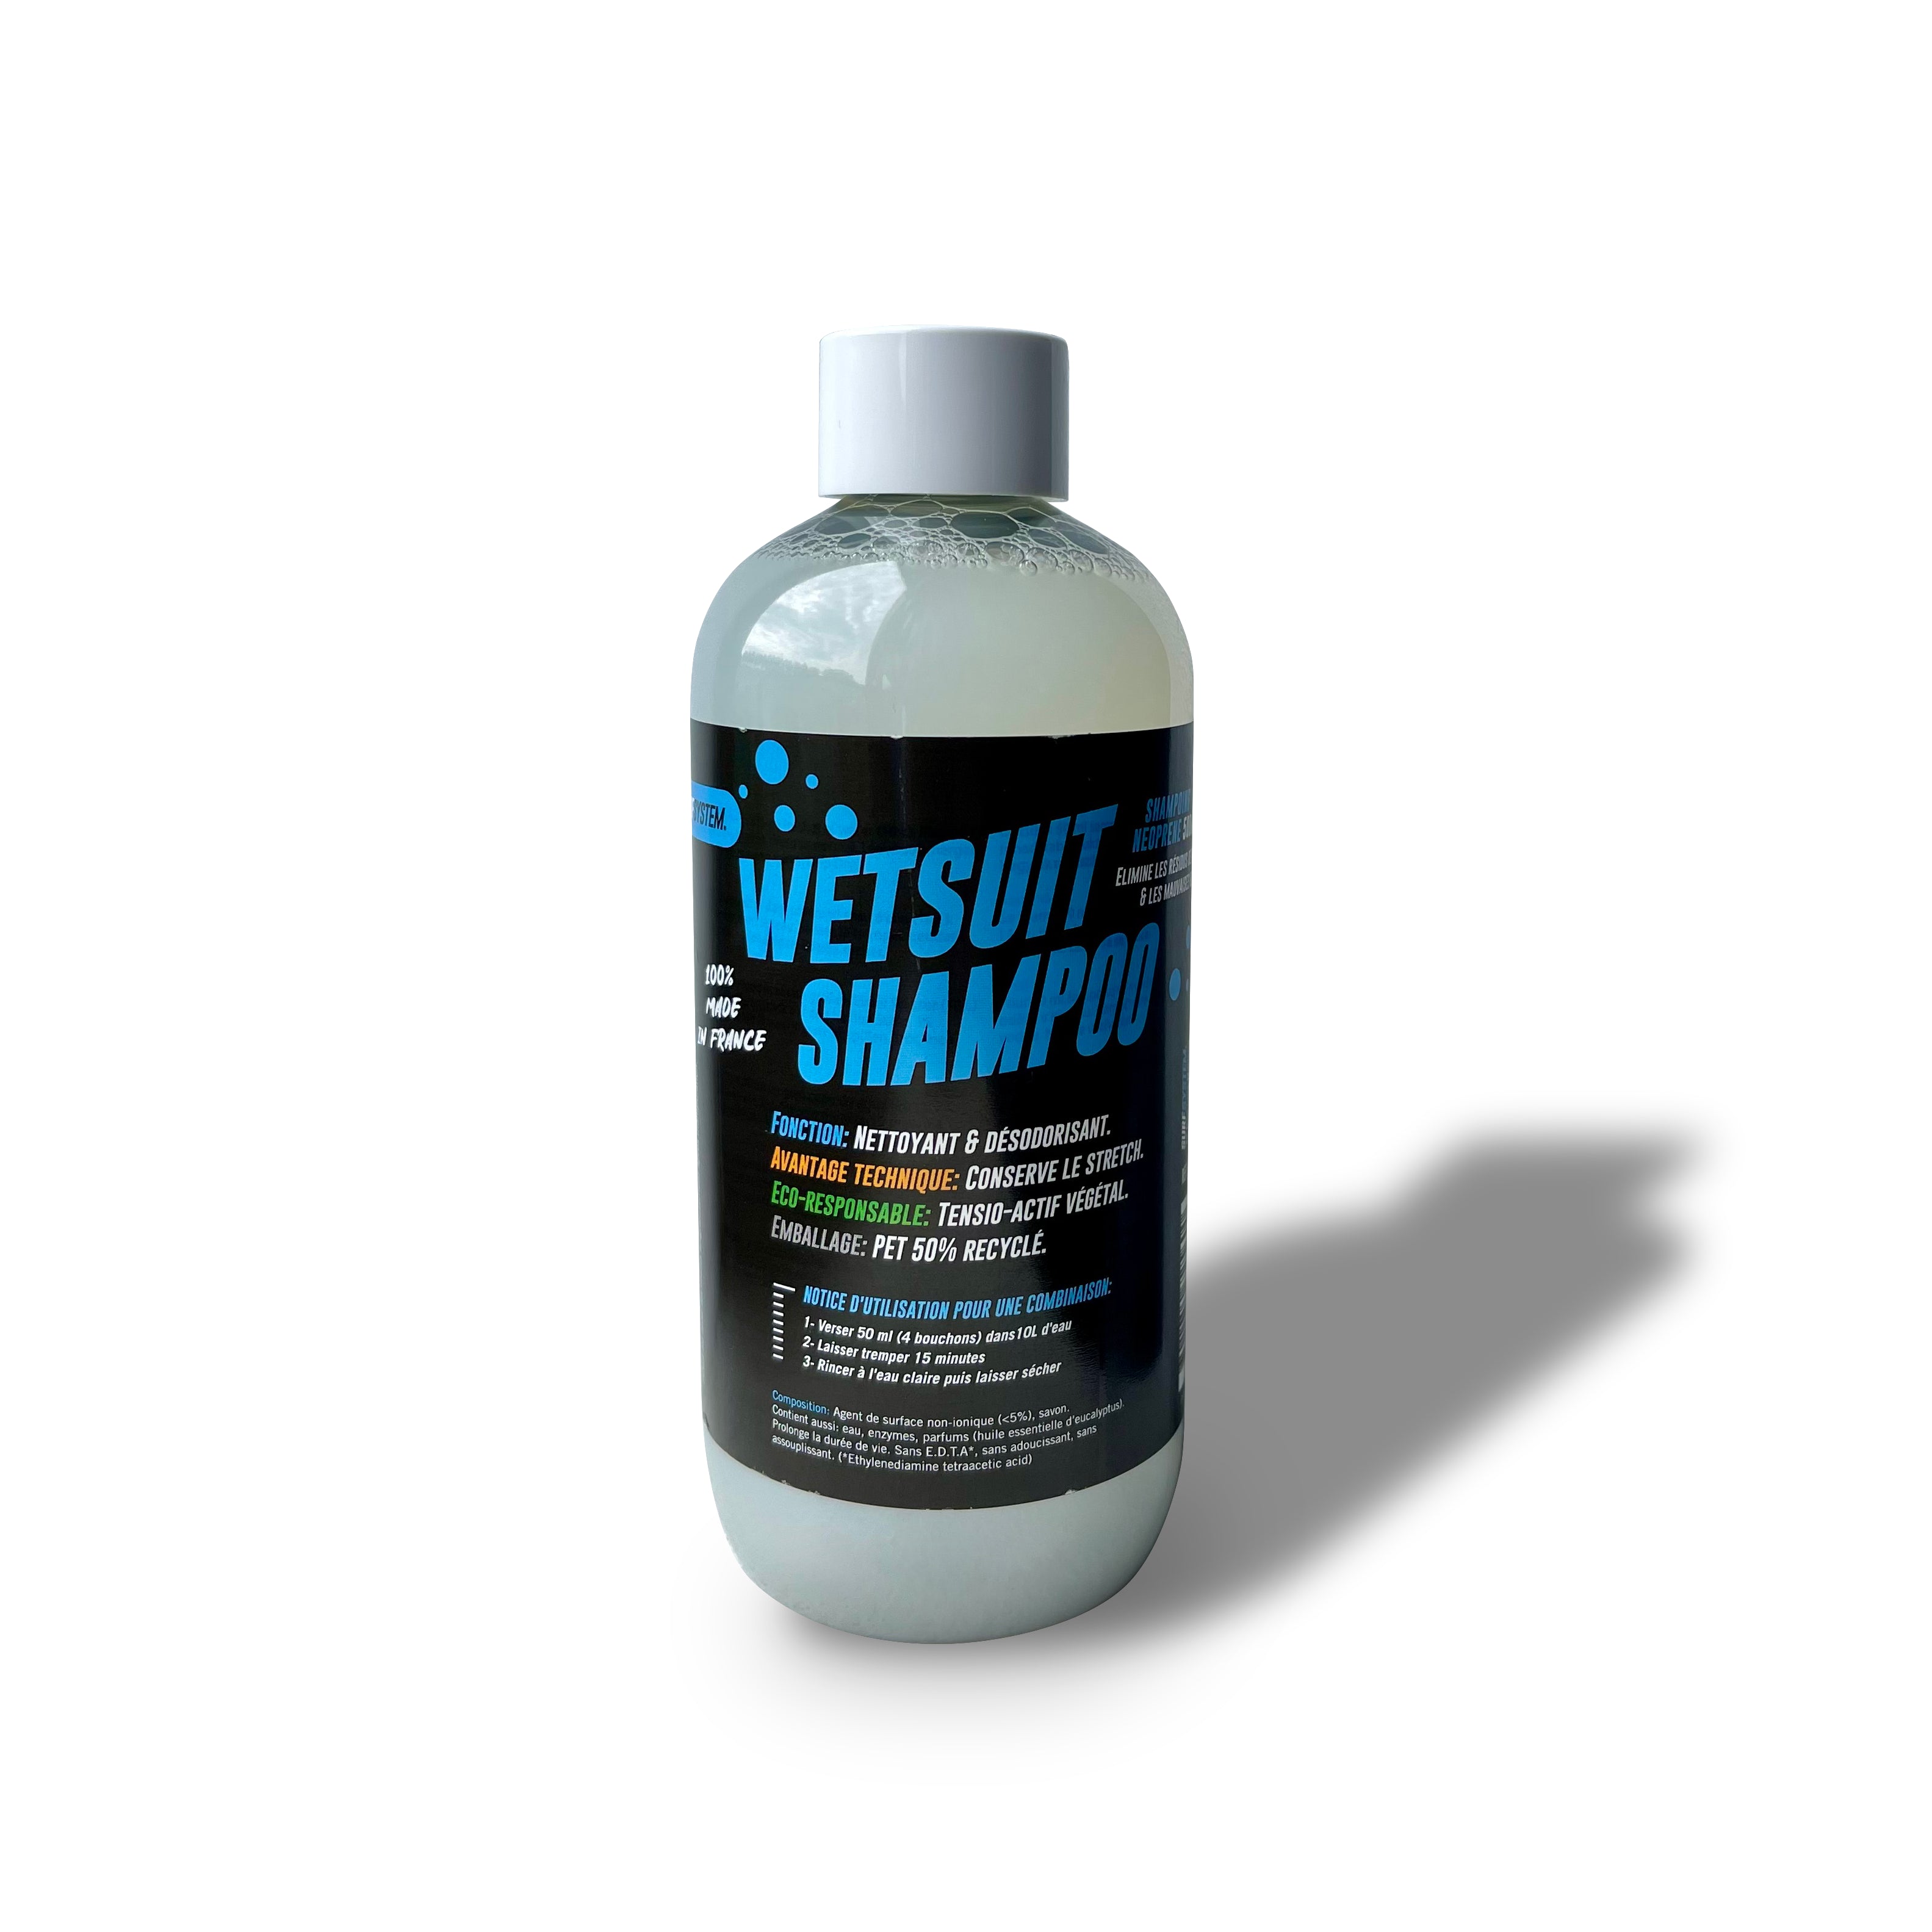 SURF SYSTEM - Shampooing Neoprene - Wetsuit Shampoo 500ml